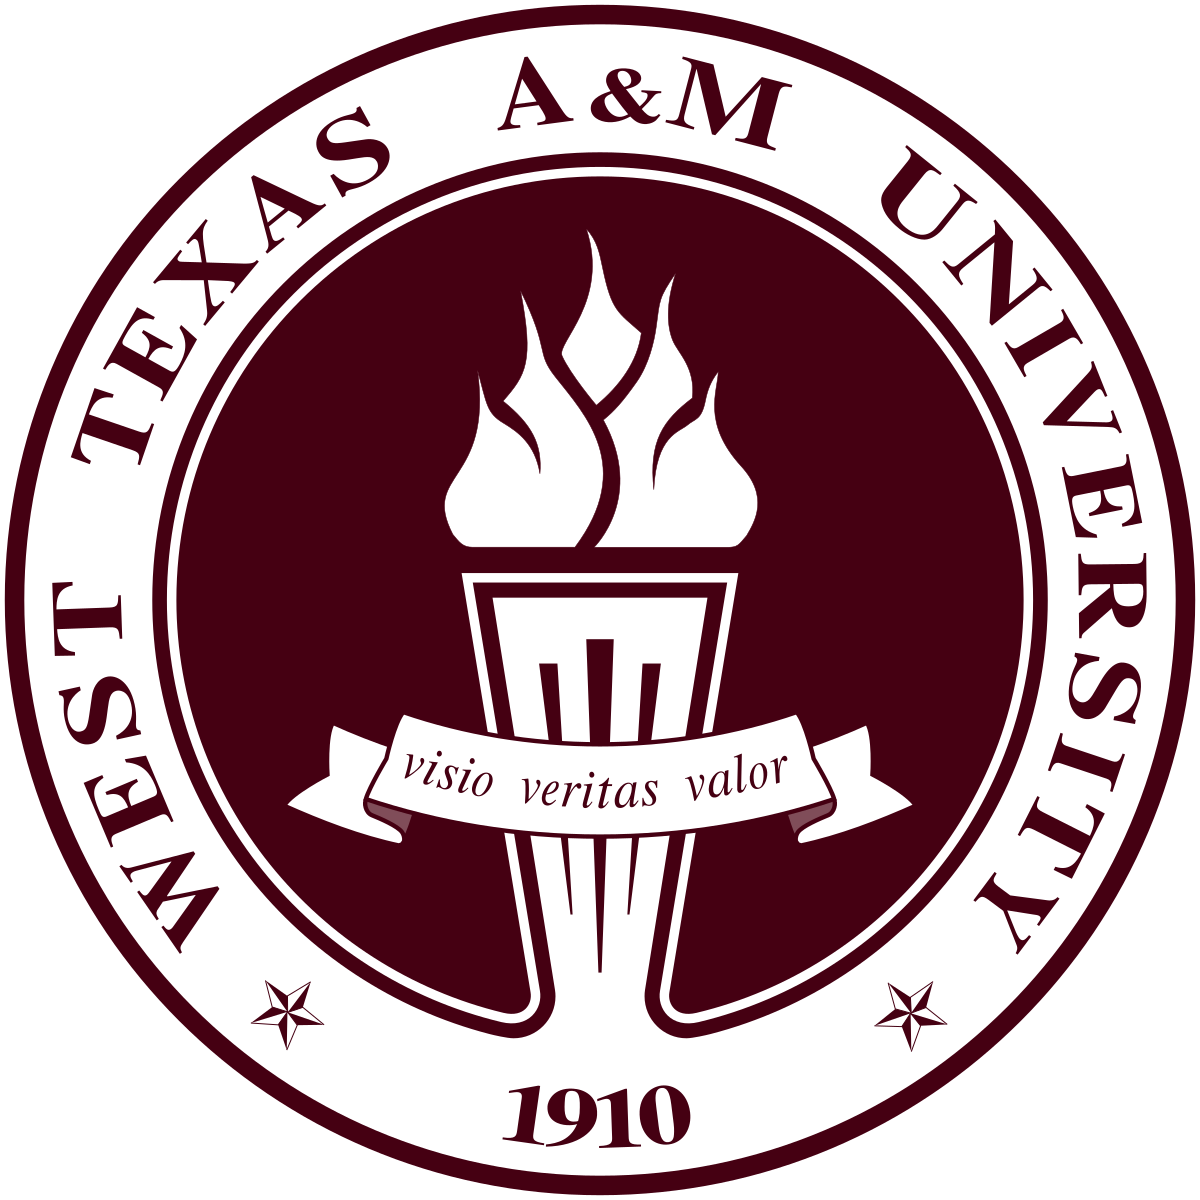 TAMUS System News – The Texas A&M University System Network